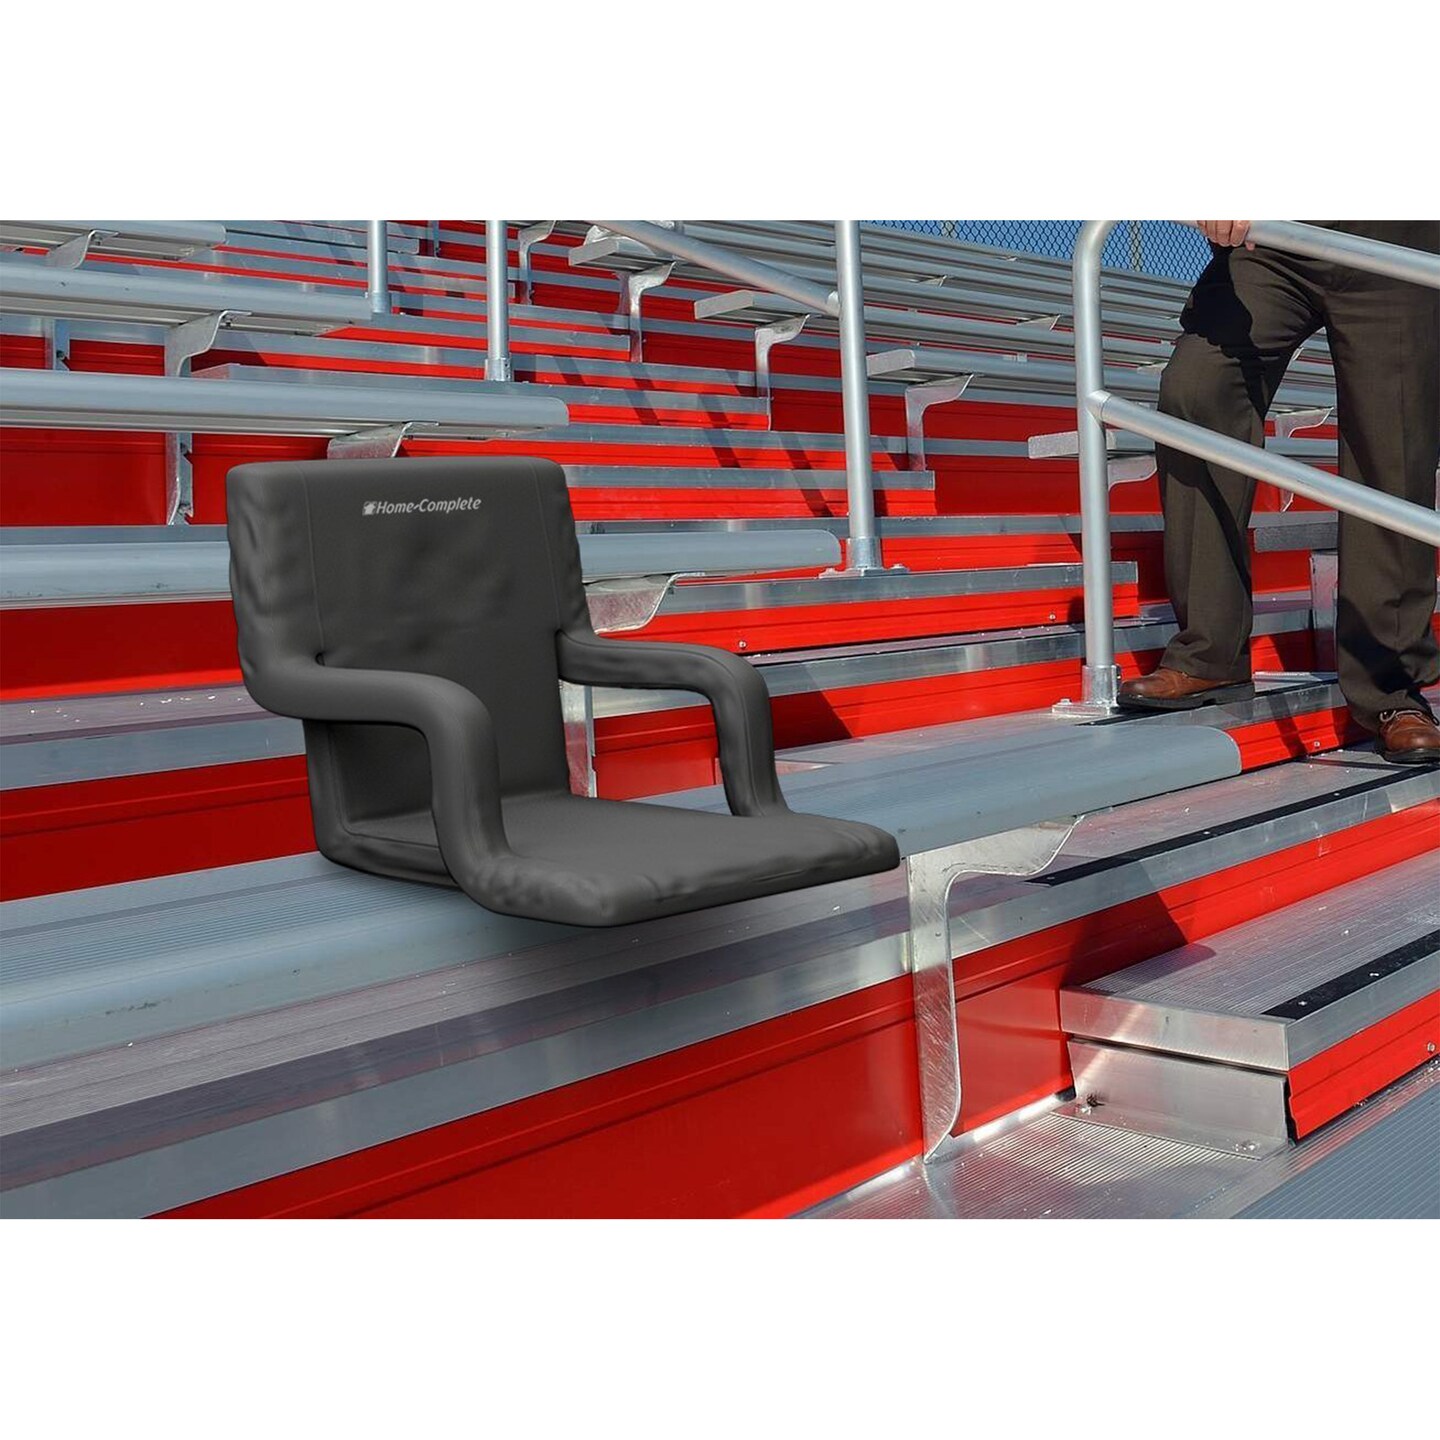 Stadium Sports Cushion Padded Bleacher Seat